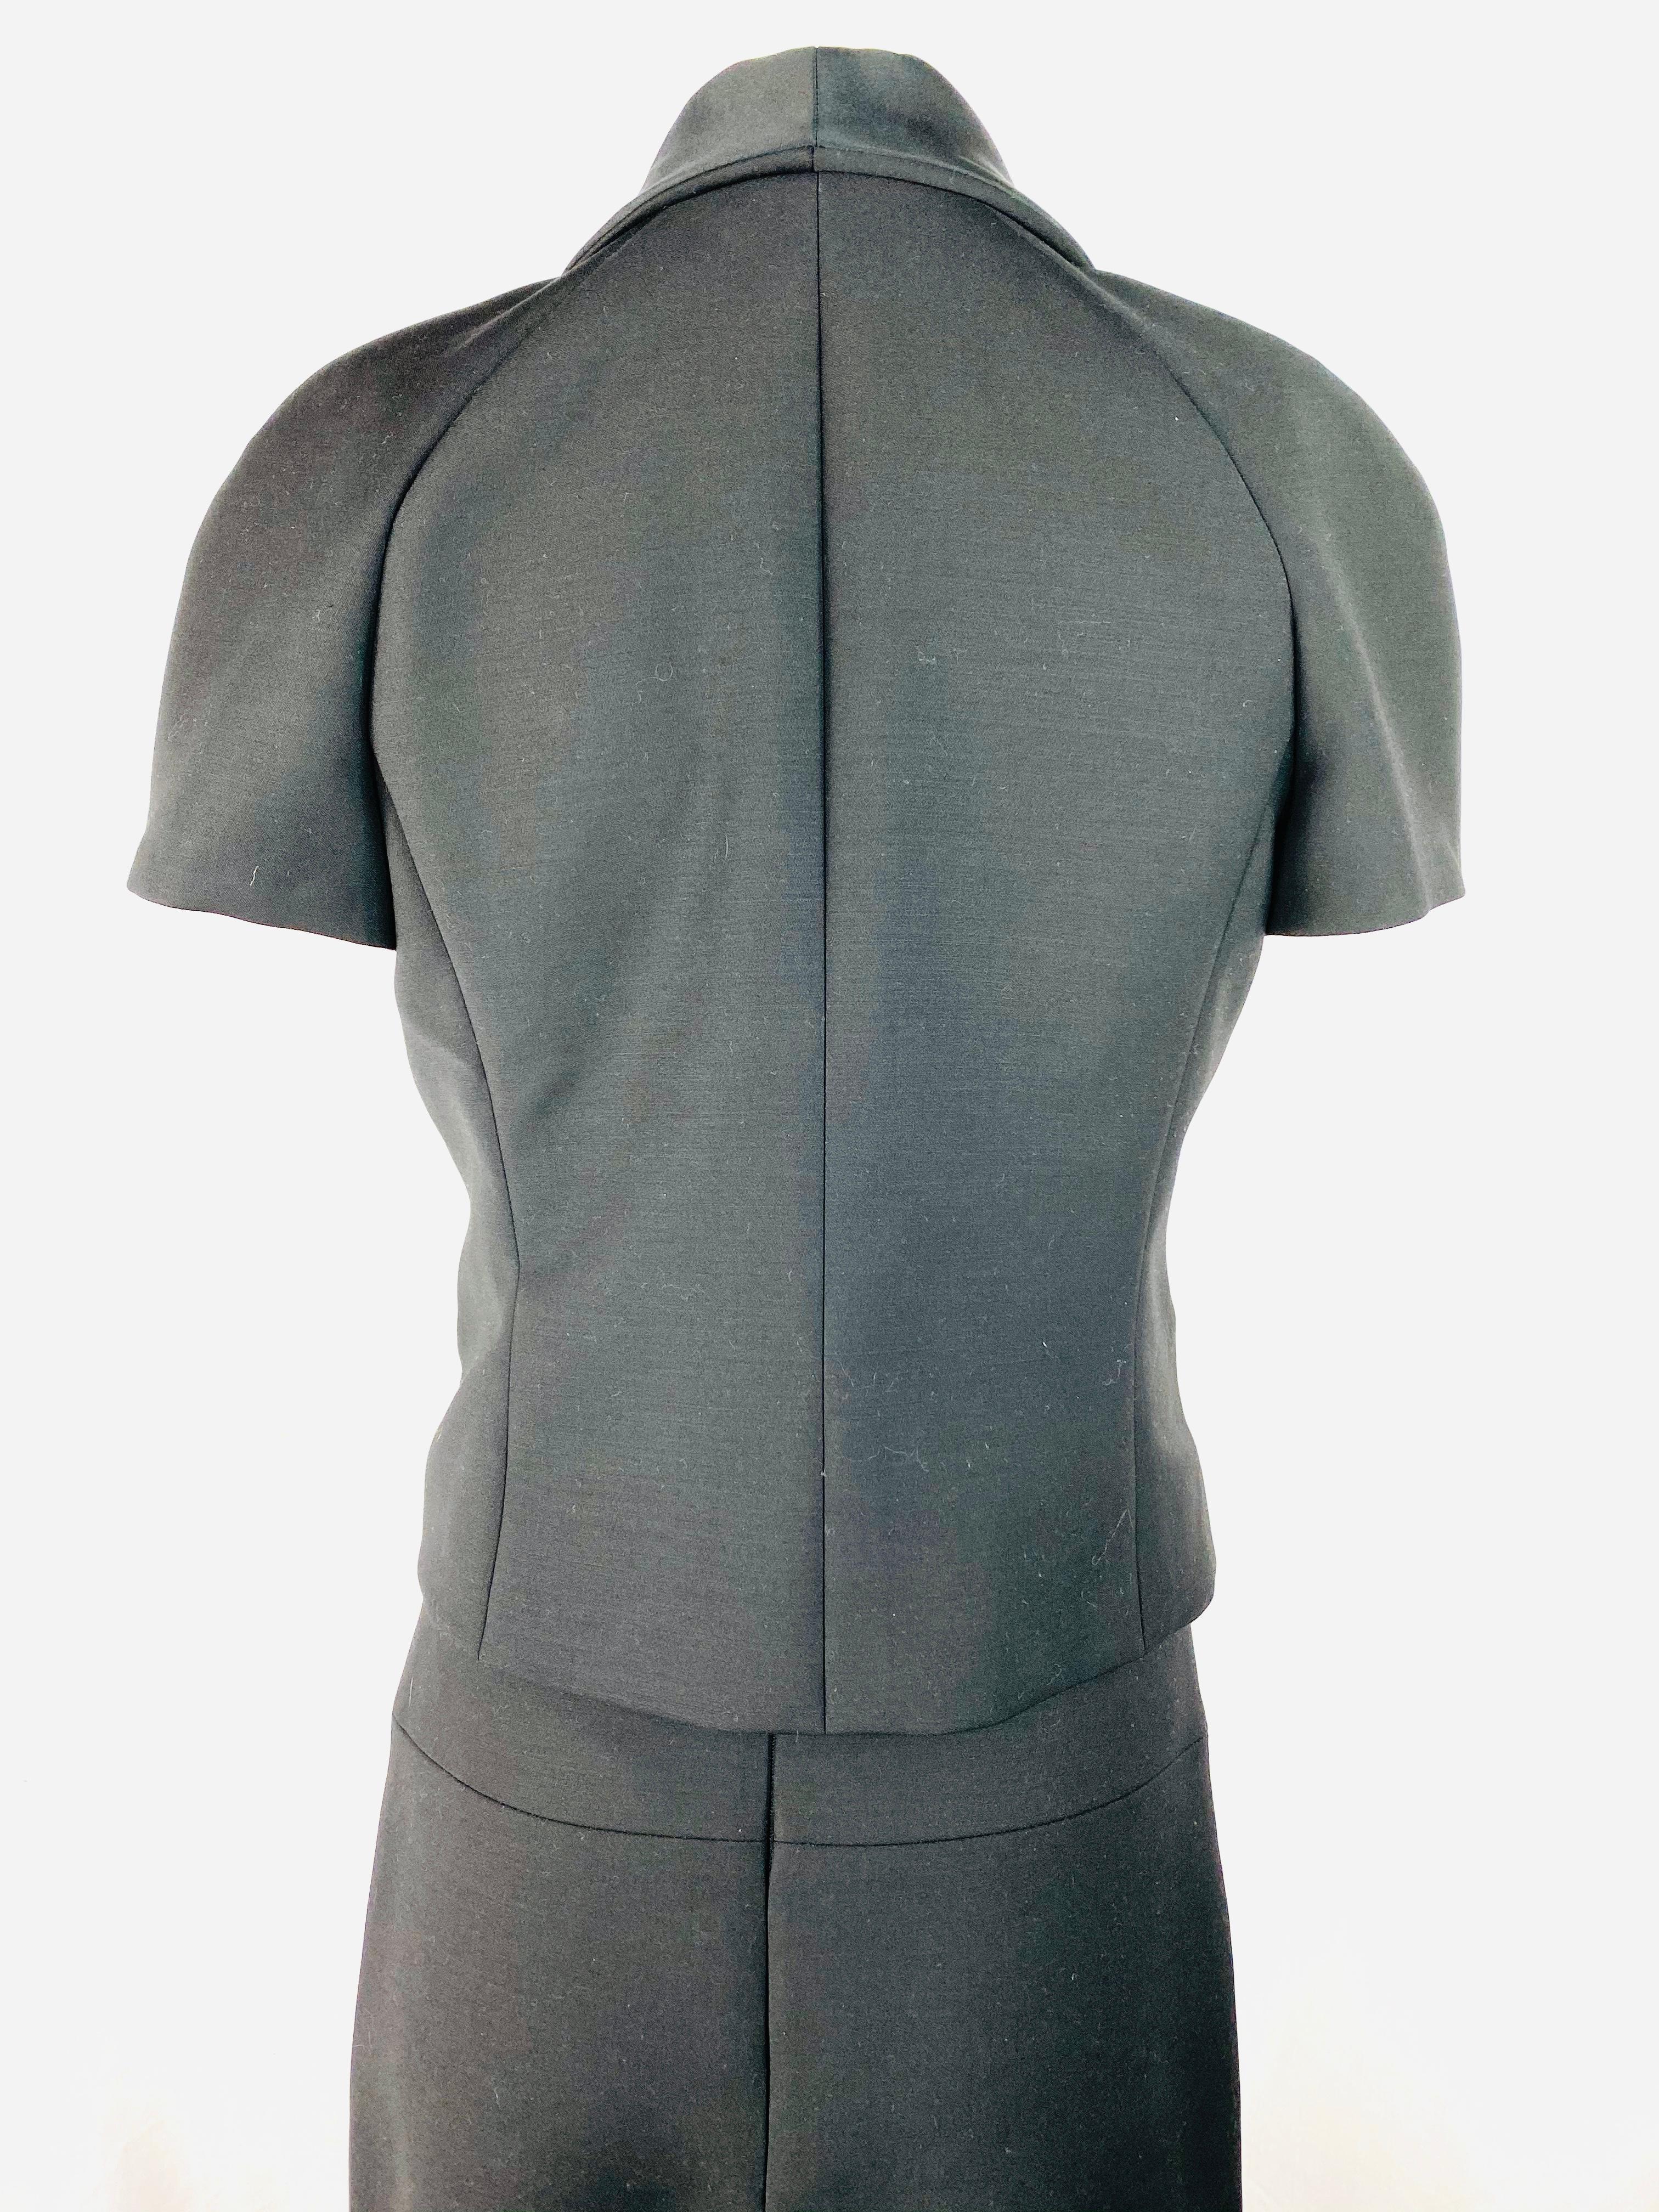 Chanel Black Wool Blend Short Sleeves Blazer Jacket and Maxi Skirt Suit Set  For Sale 3